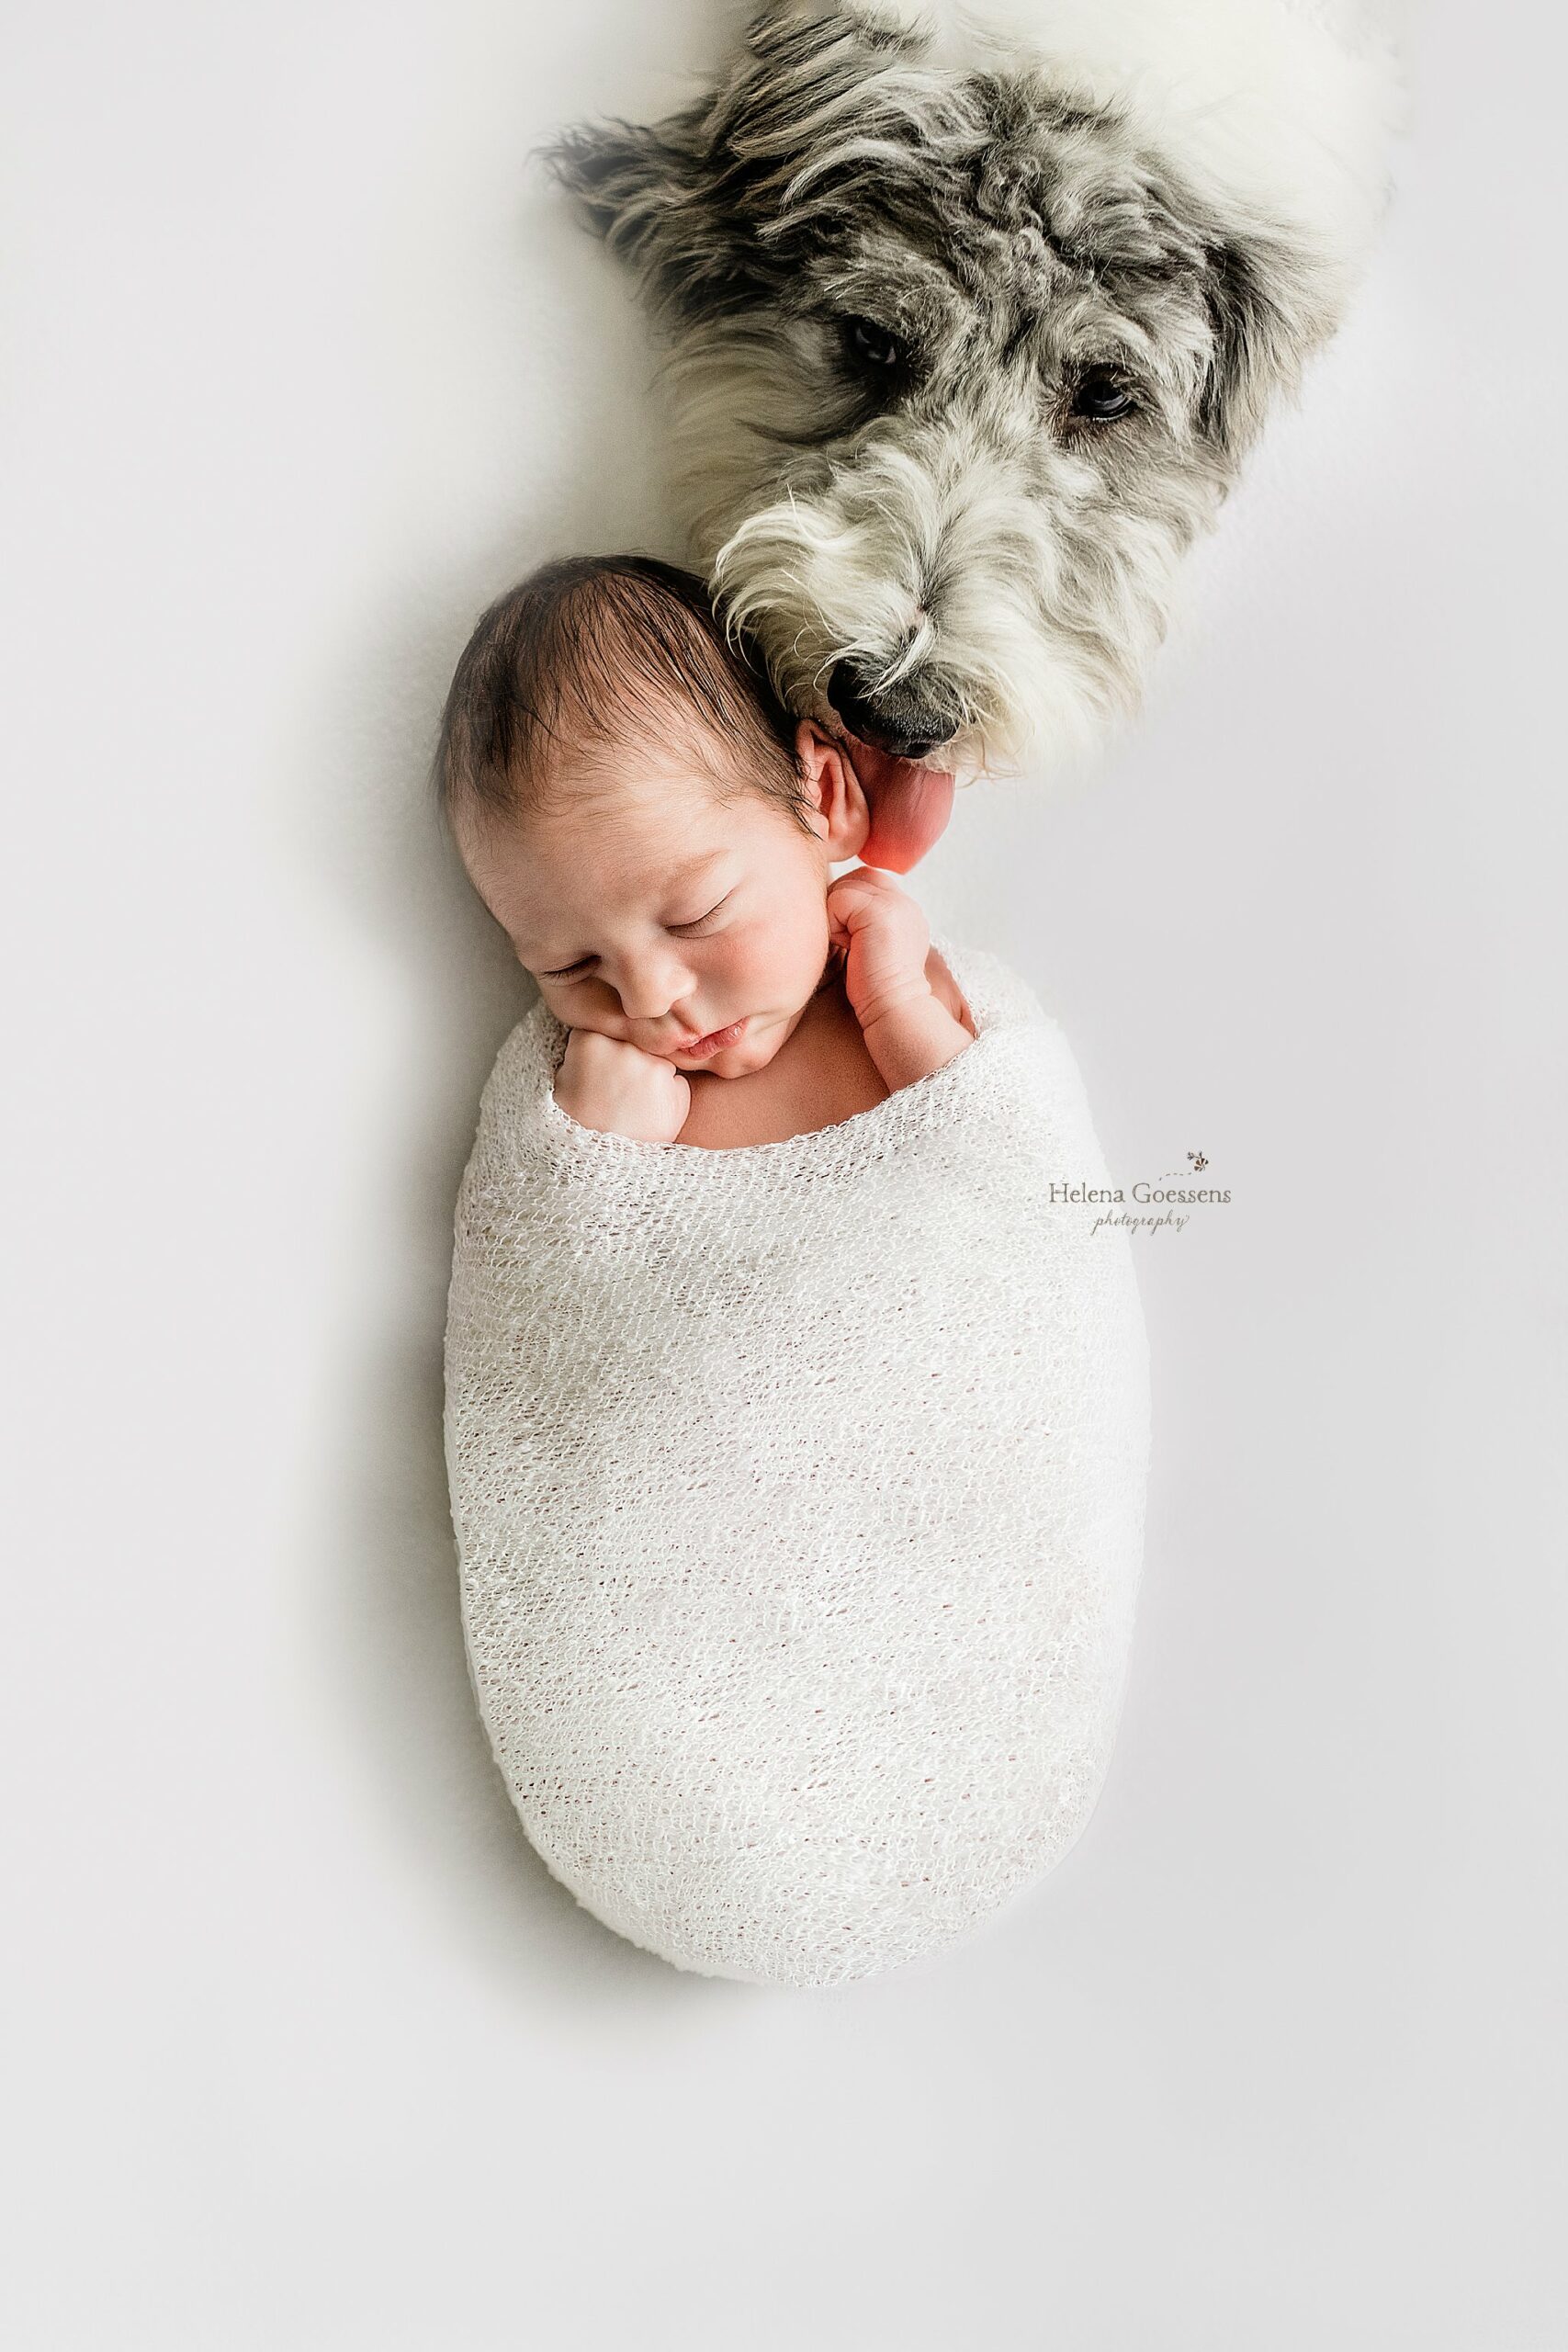 dog licks newborn baby boy during At Home Newborn Portraits